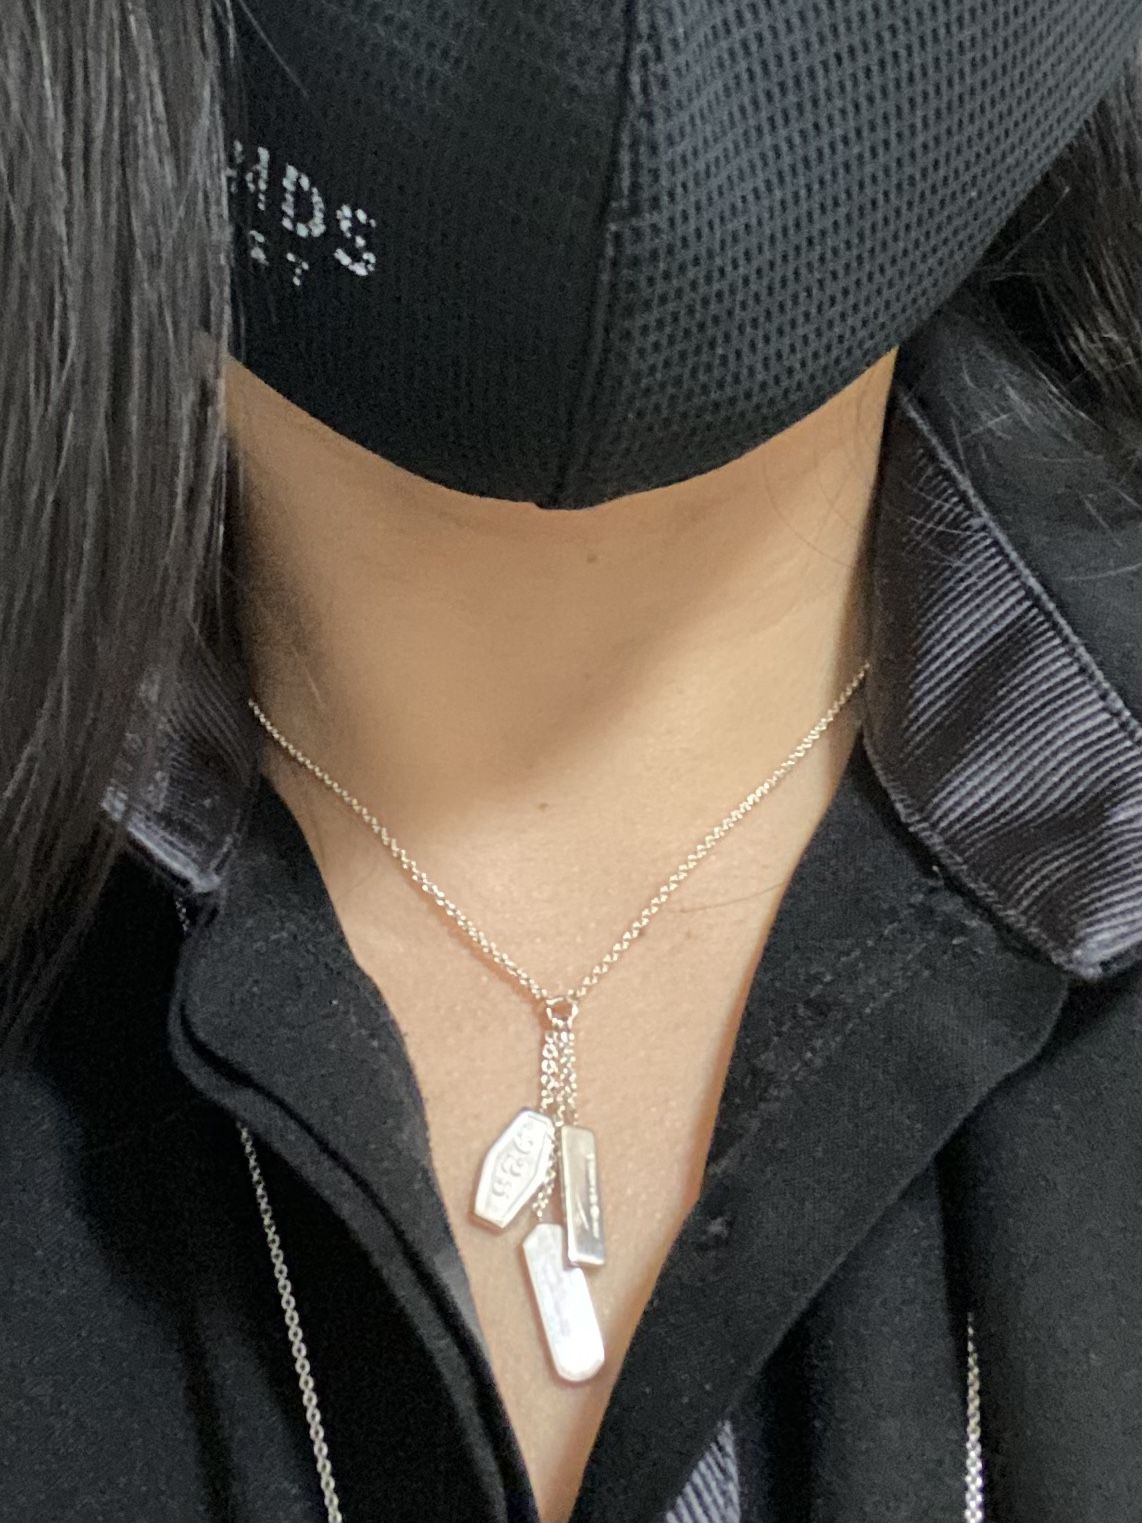 Tiffany & Co 3 Bars Pendant necklace silver 925